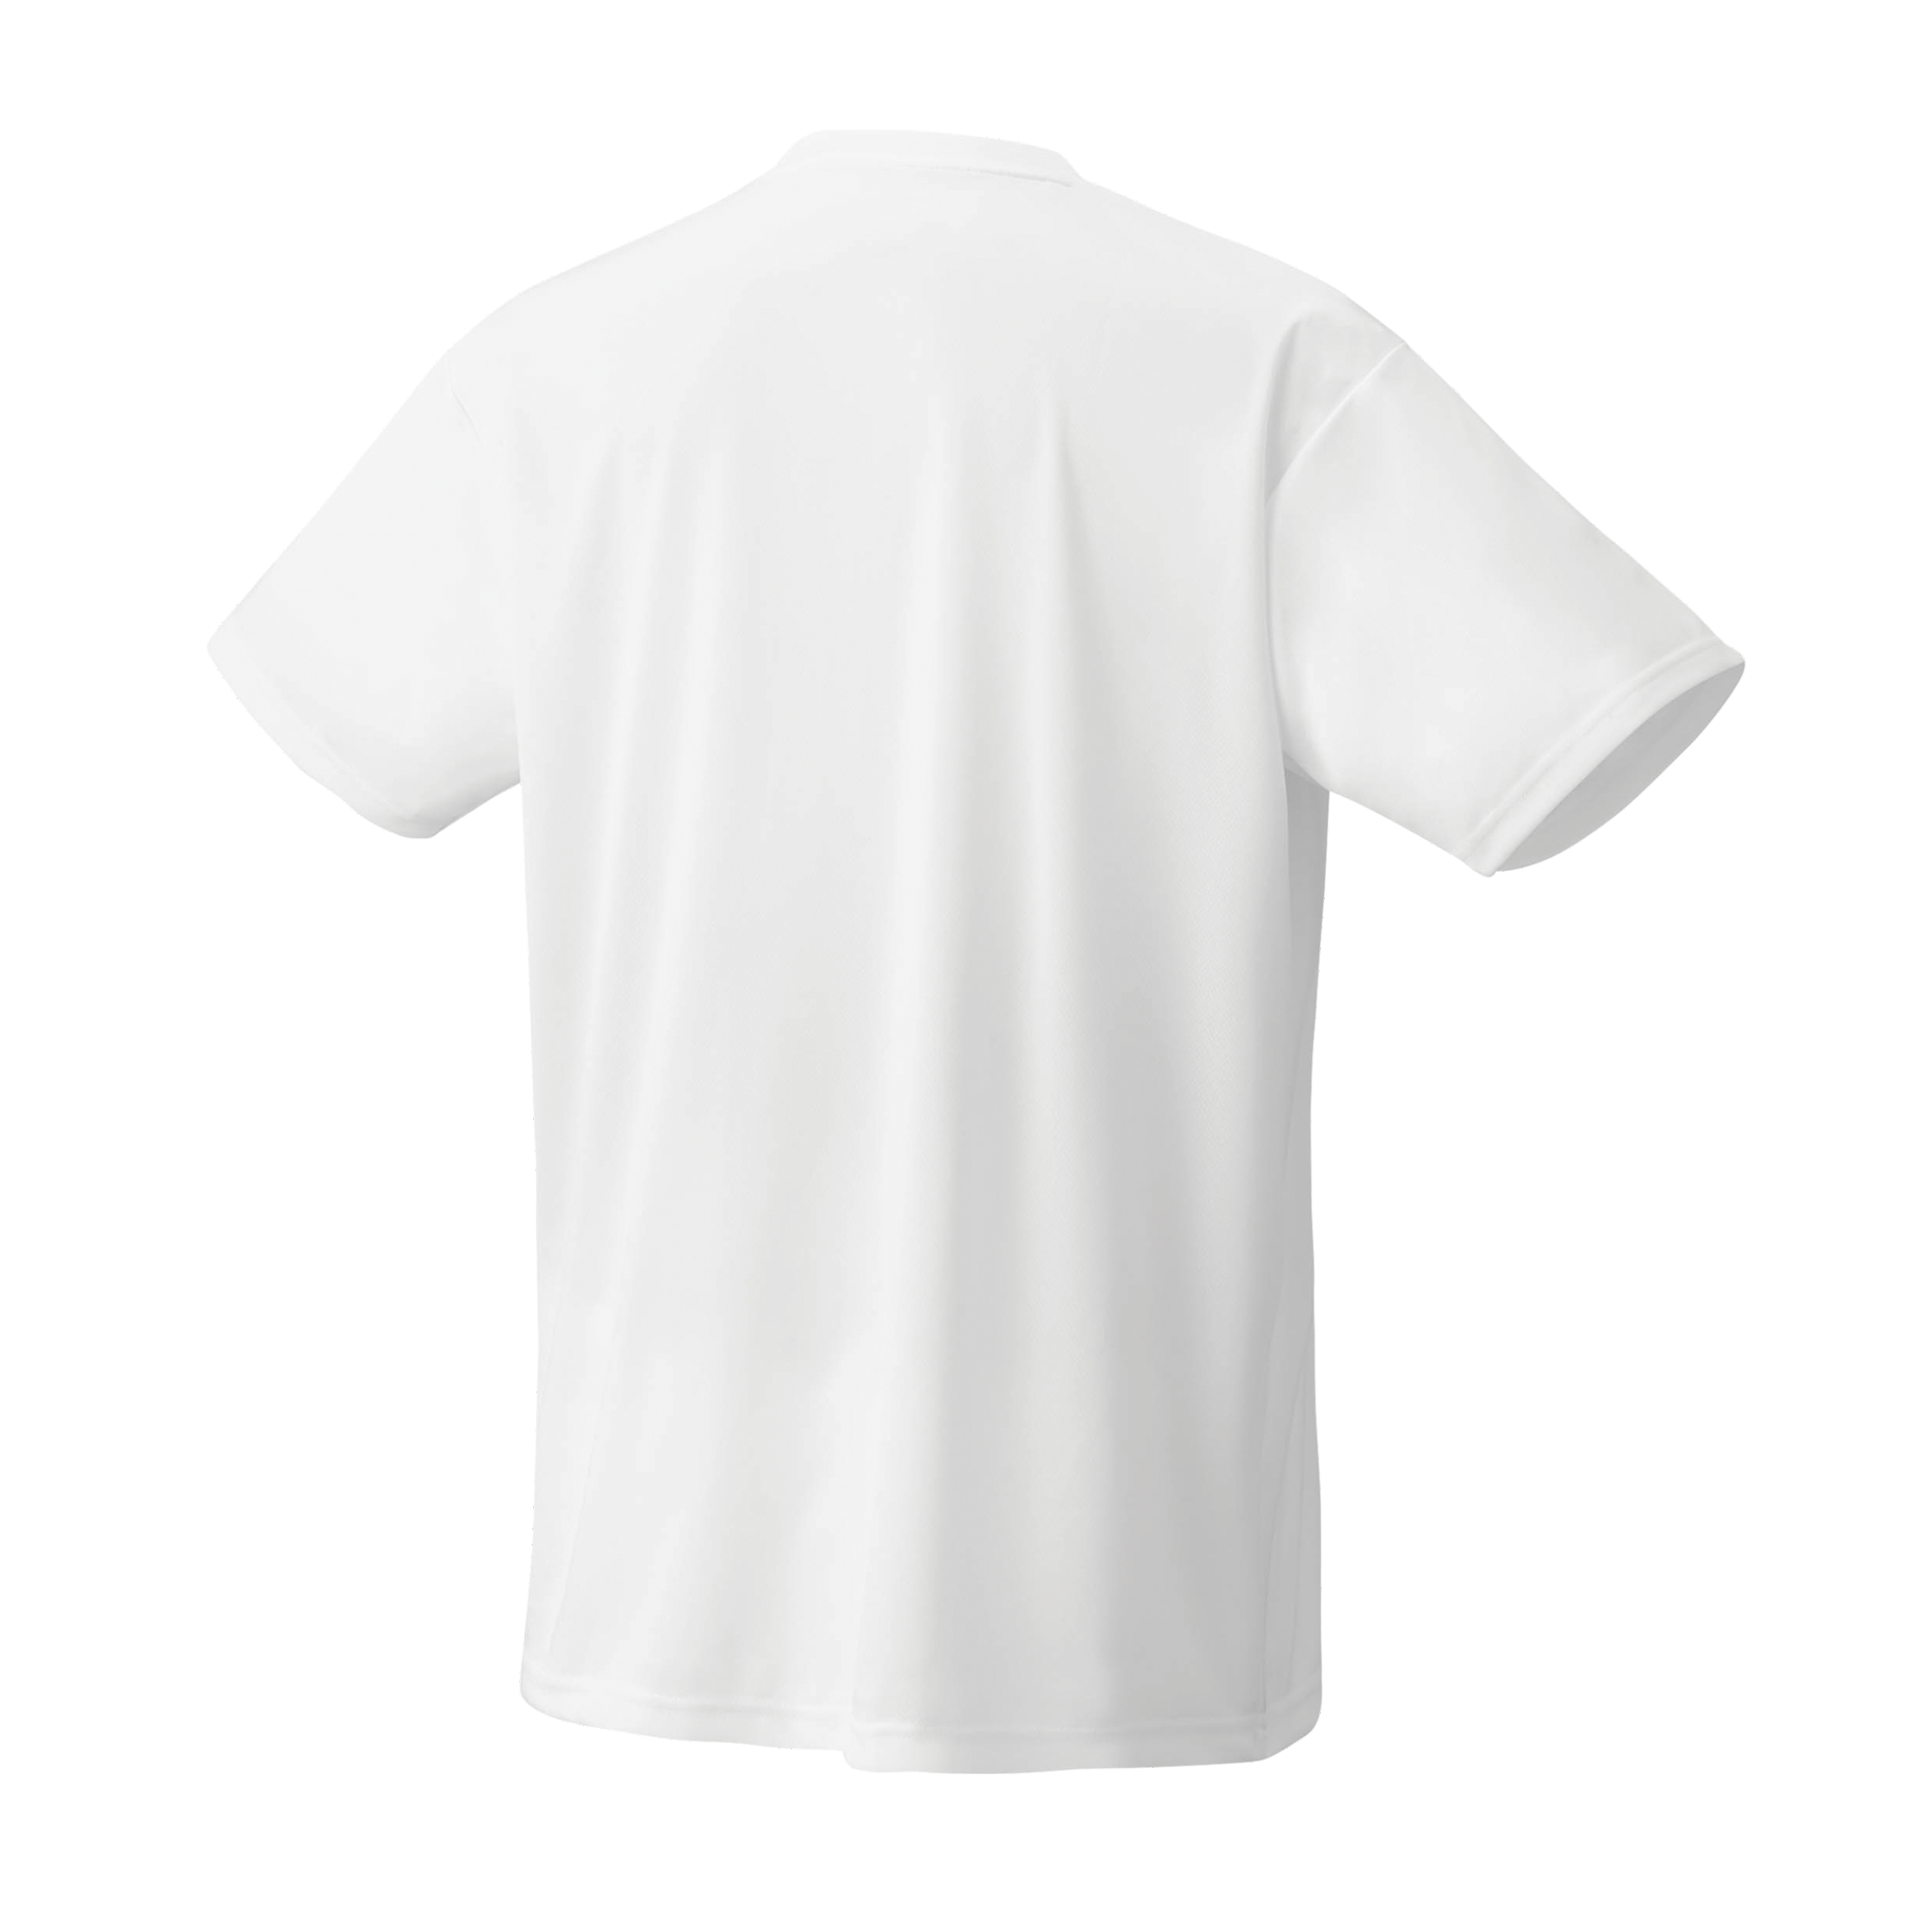 Yonex Badminton/ Tennis Sports Shirt YM0046EX White MEN'S